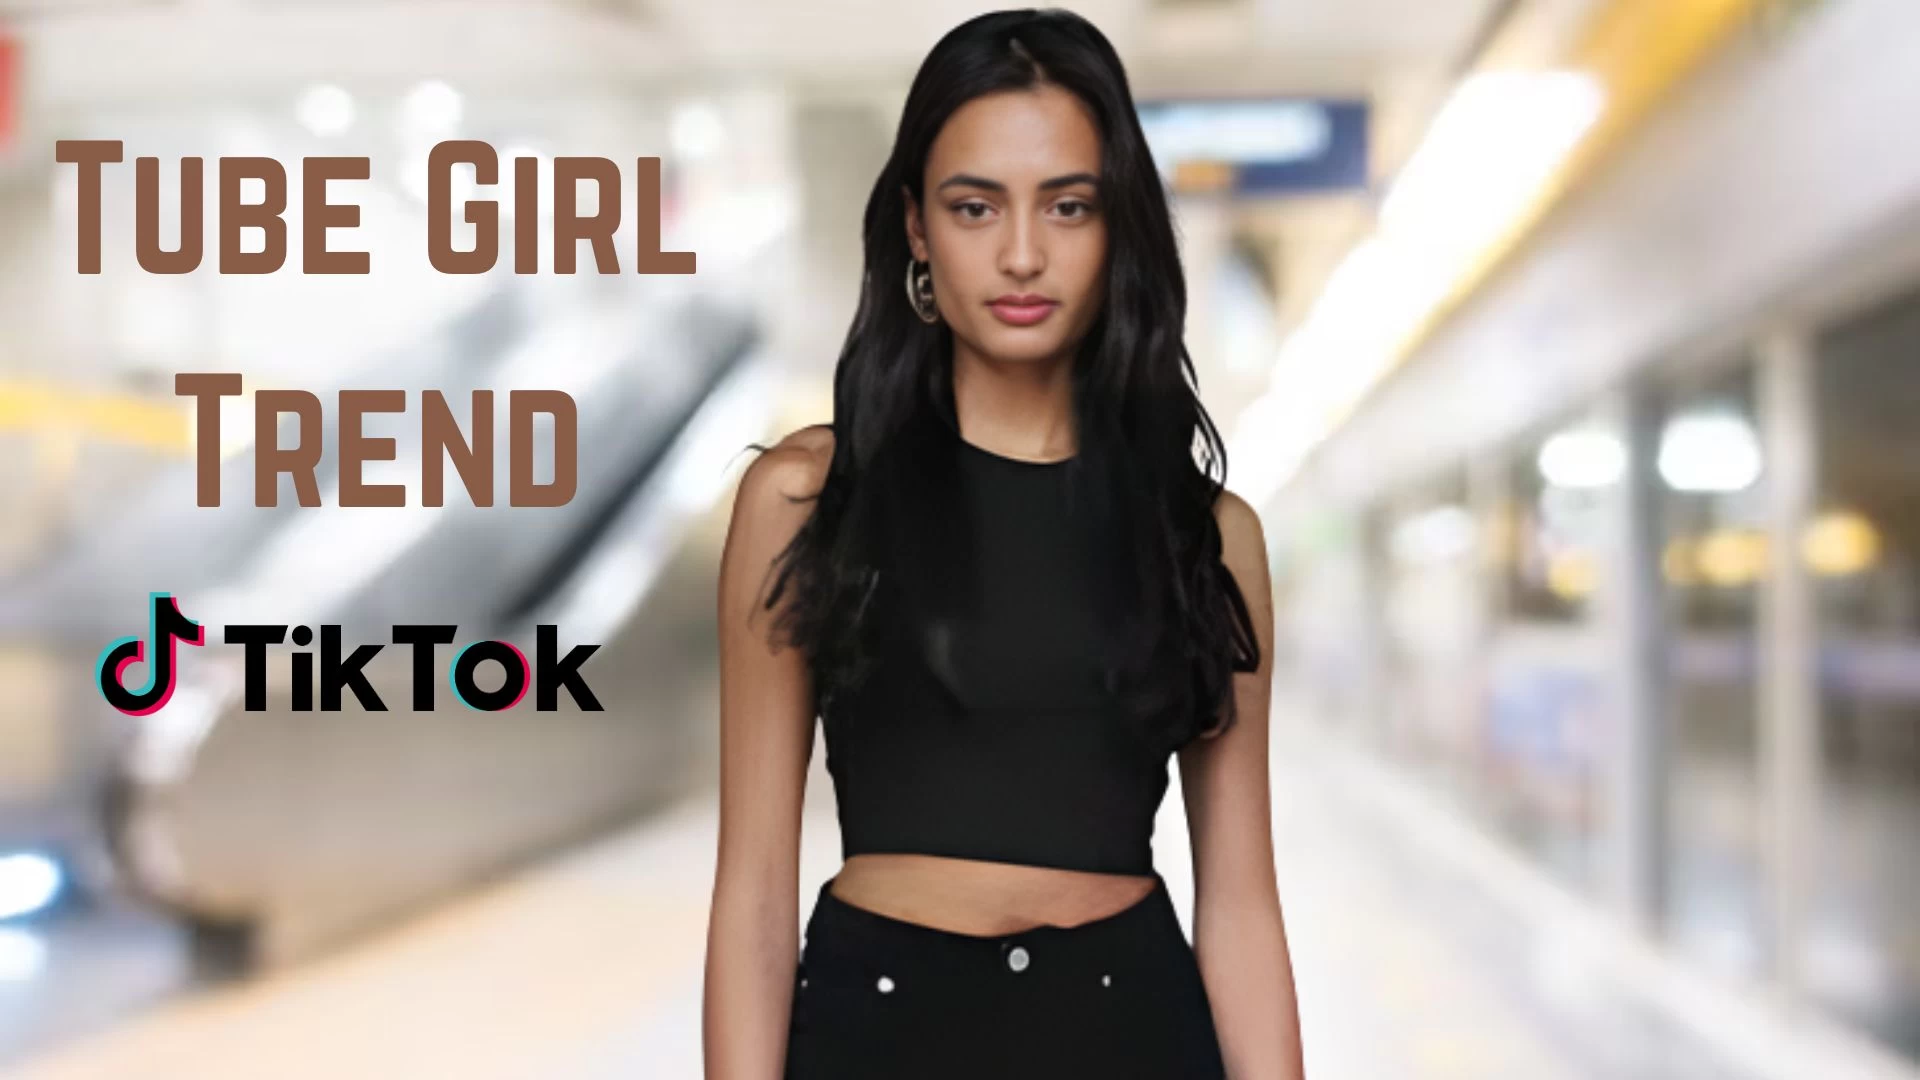 Tube Girl Trend Tiktok, ¿Cómo hacer que Tube Girl esté en Trend Tiktok?